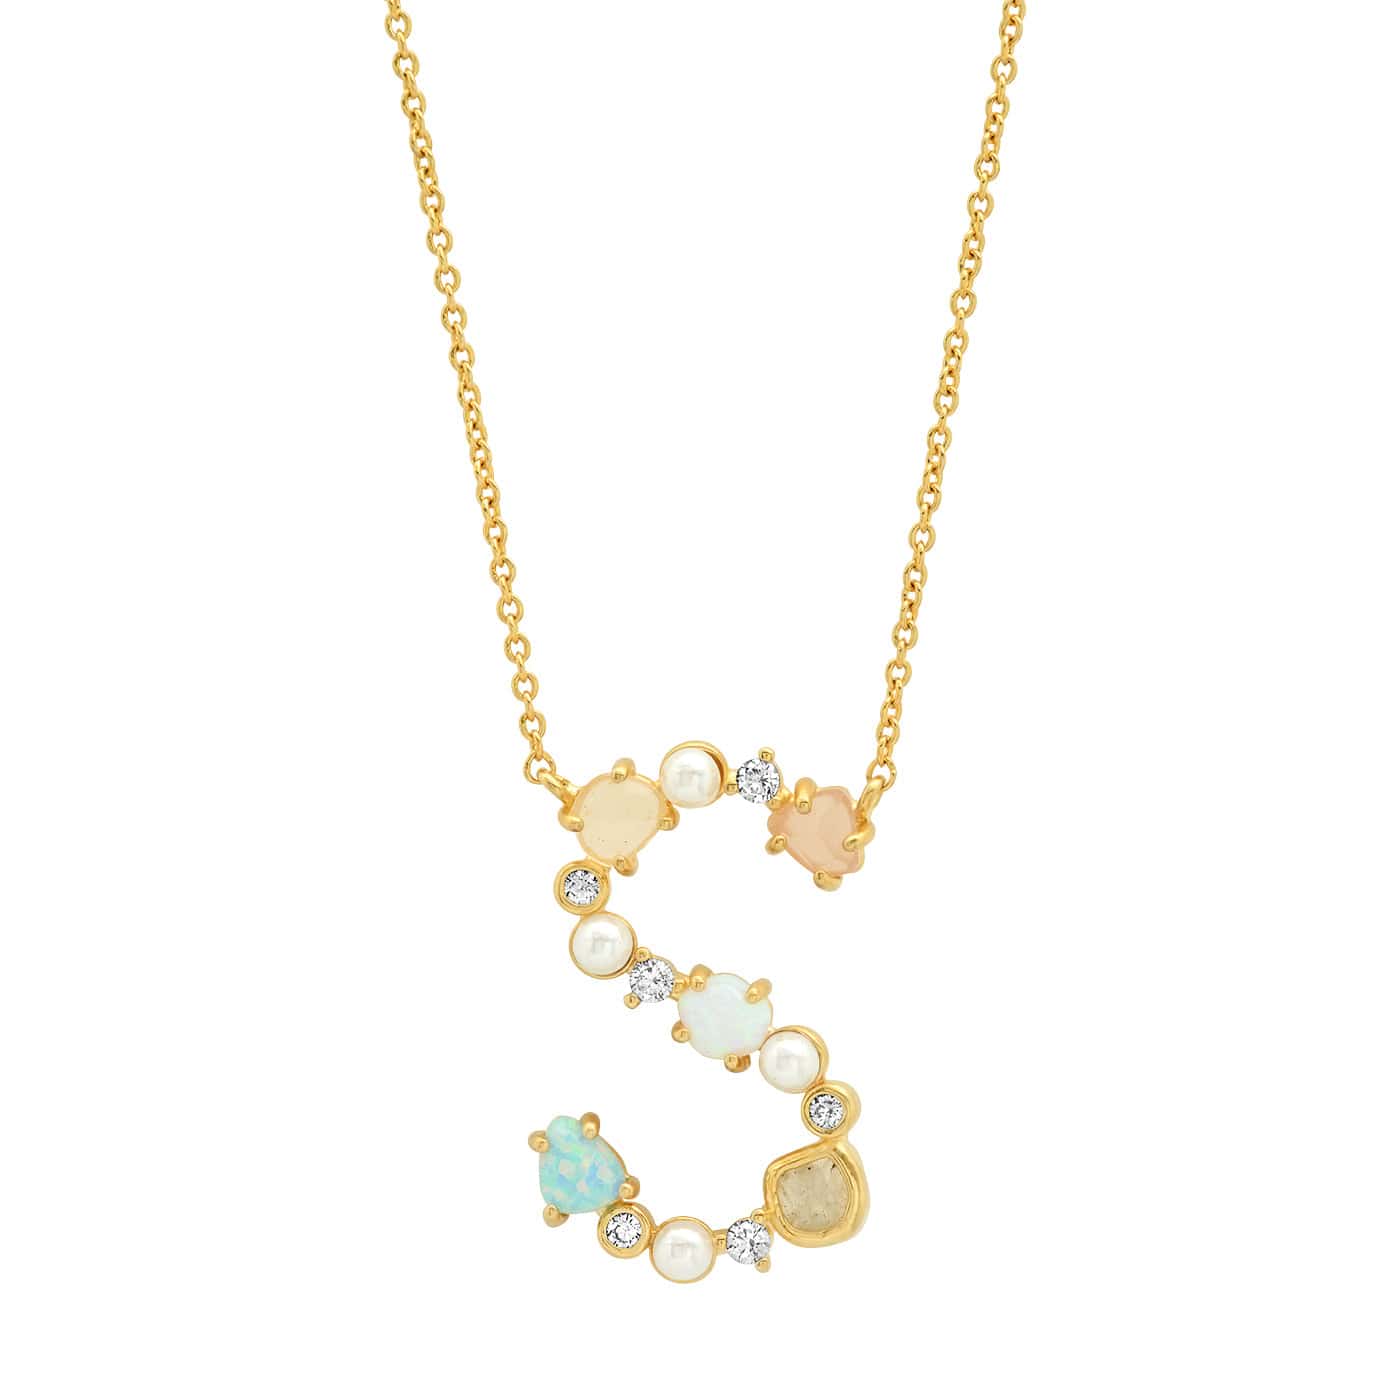 TAI JEWELRY Necklace S Opal Stone Monogram Necklace